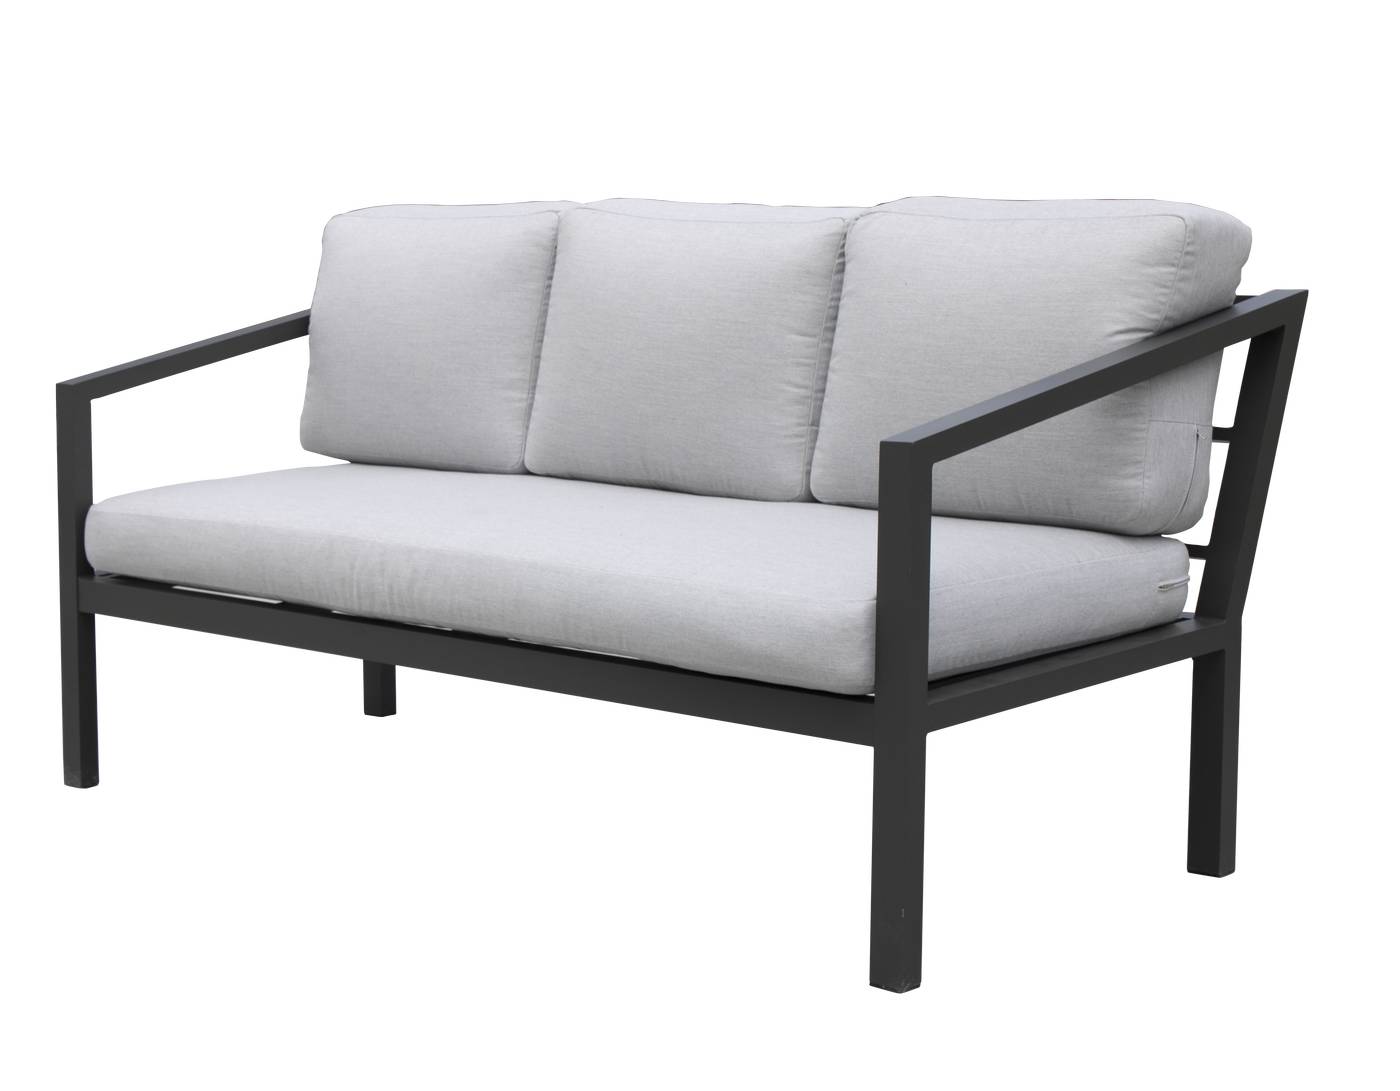 Set Aluminio Oregón-8 - Conjunto de aluminio: sofá de 3 plazas + 2 sillones + 1 mesa de centro. Colores blanco, antracita, marrón, champagne o plata.